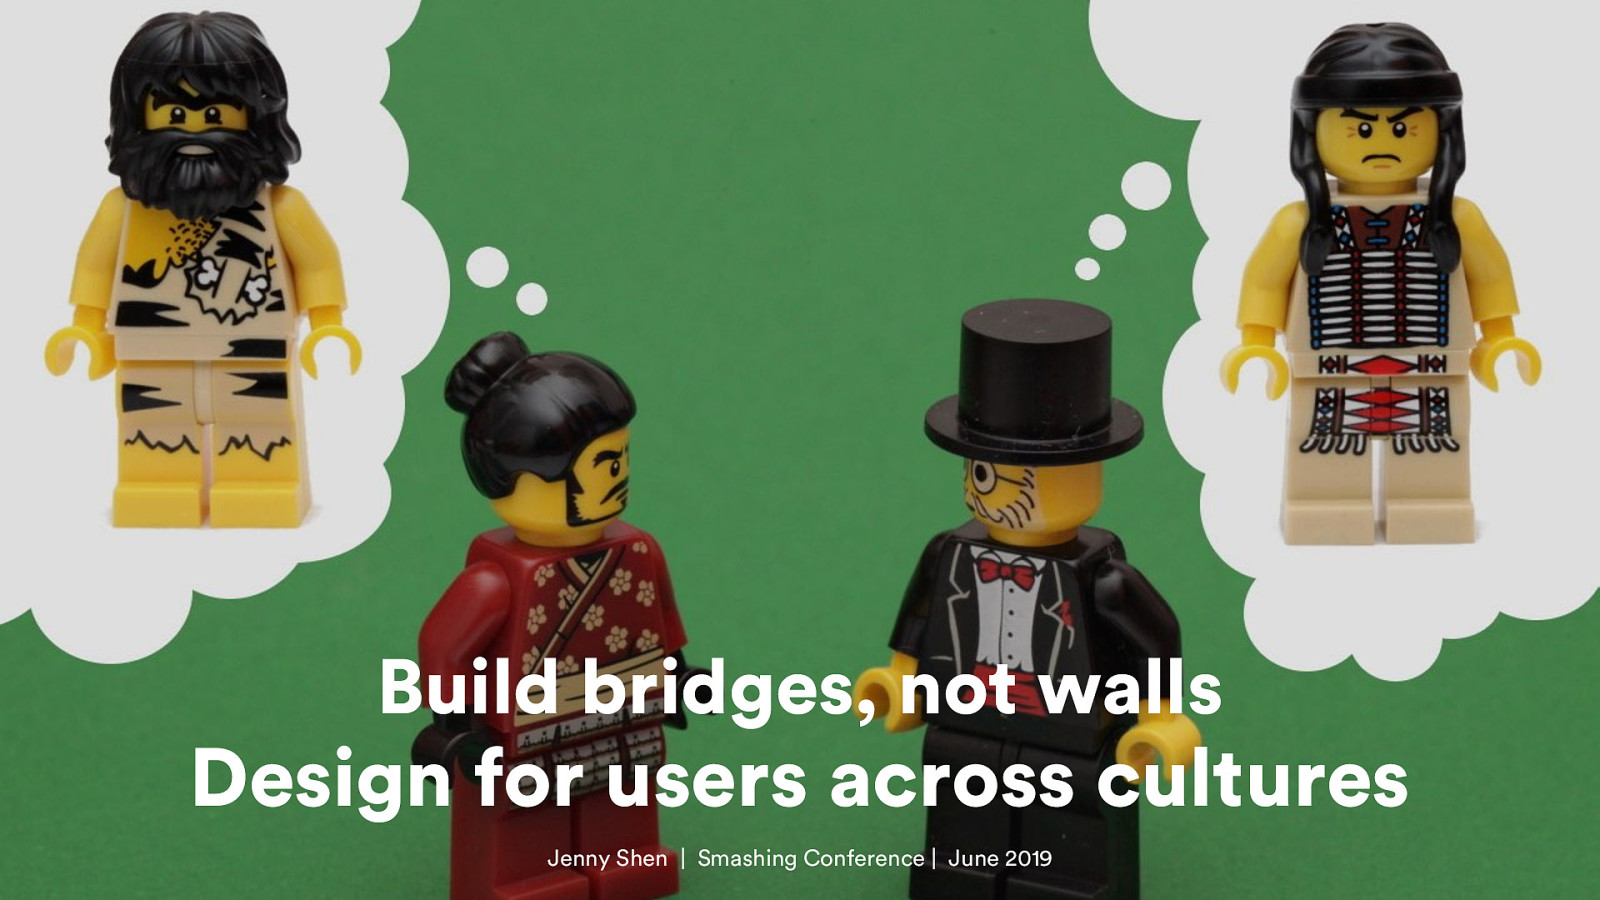 Build bridges, not walls—Design for users across cultures